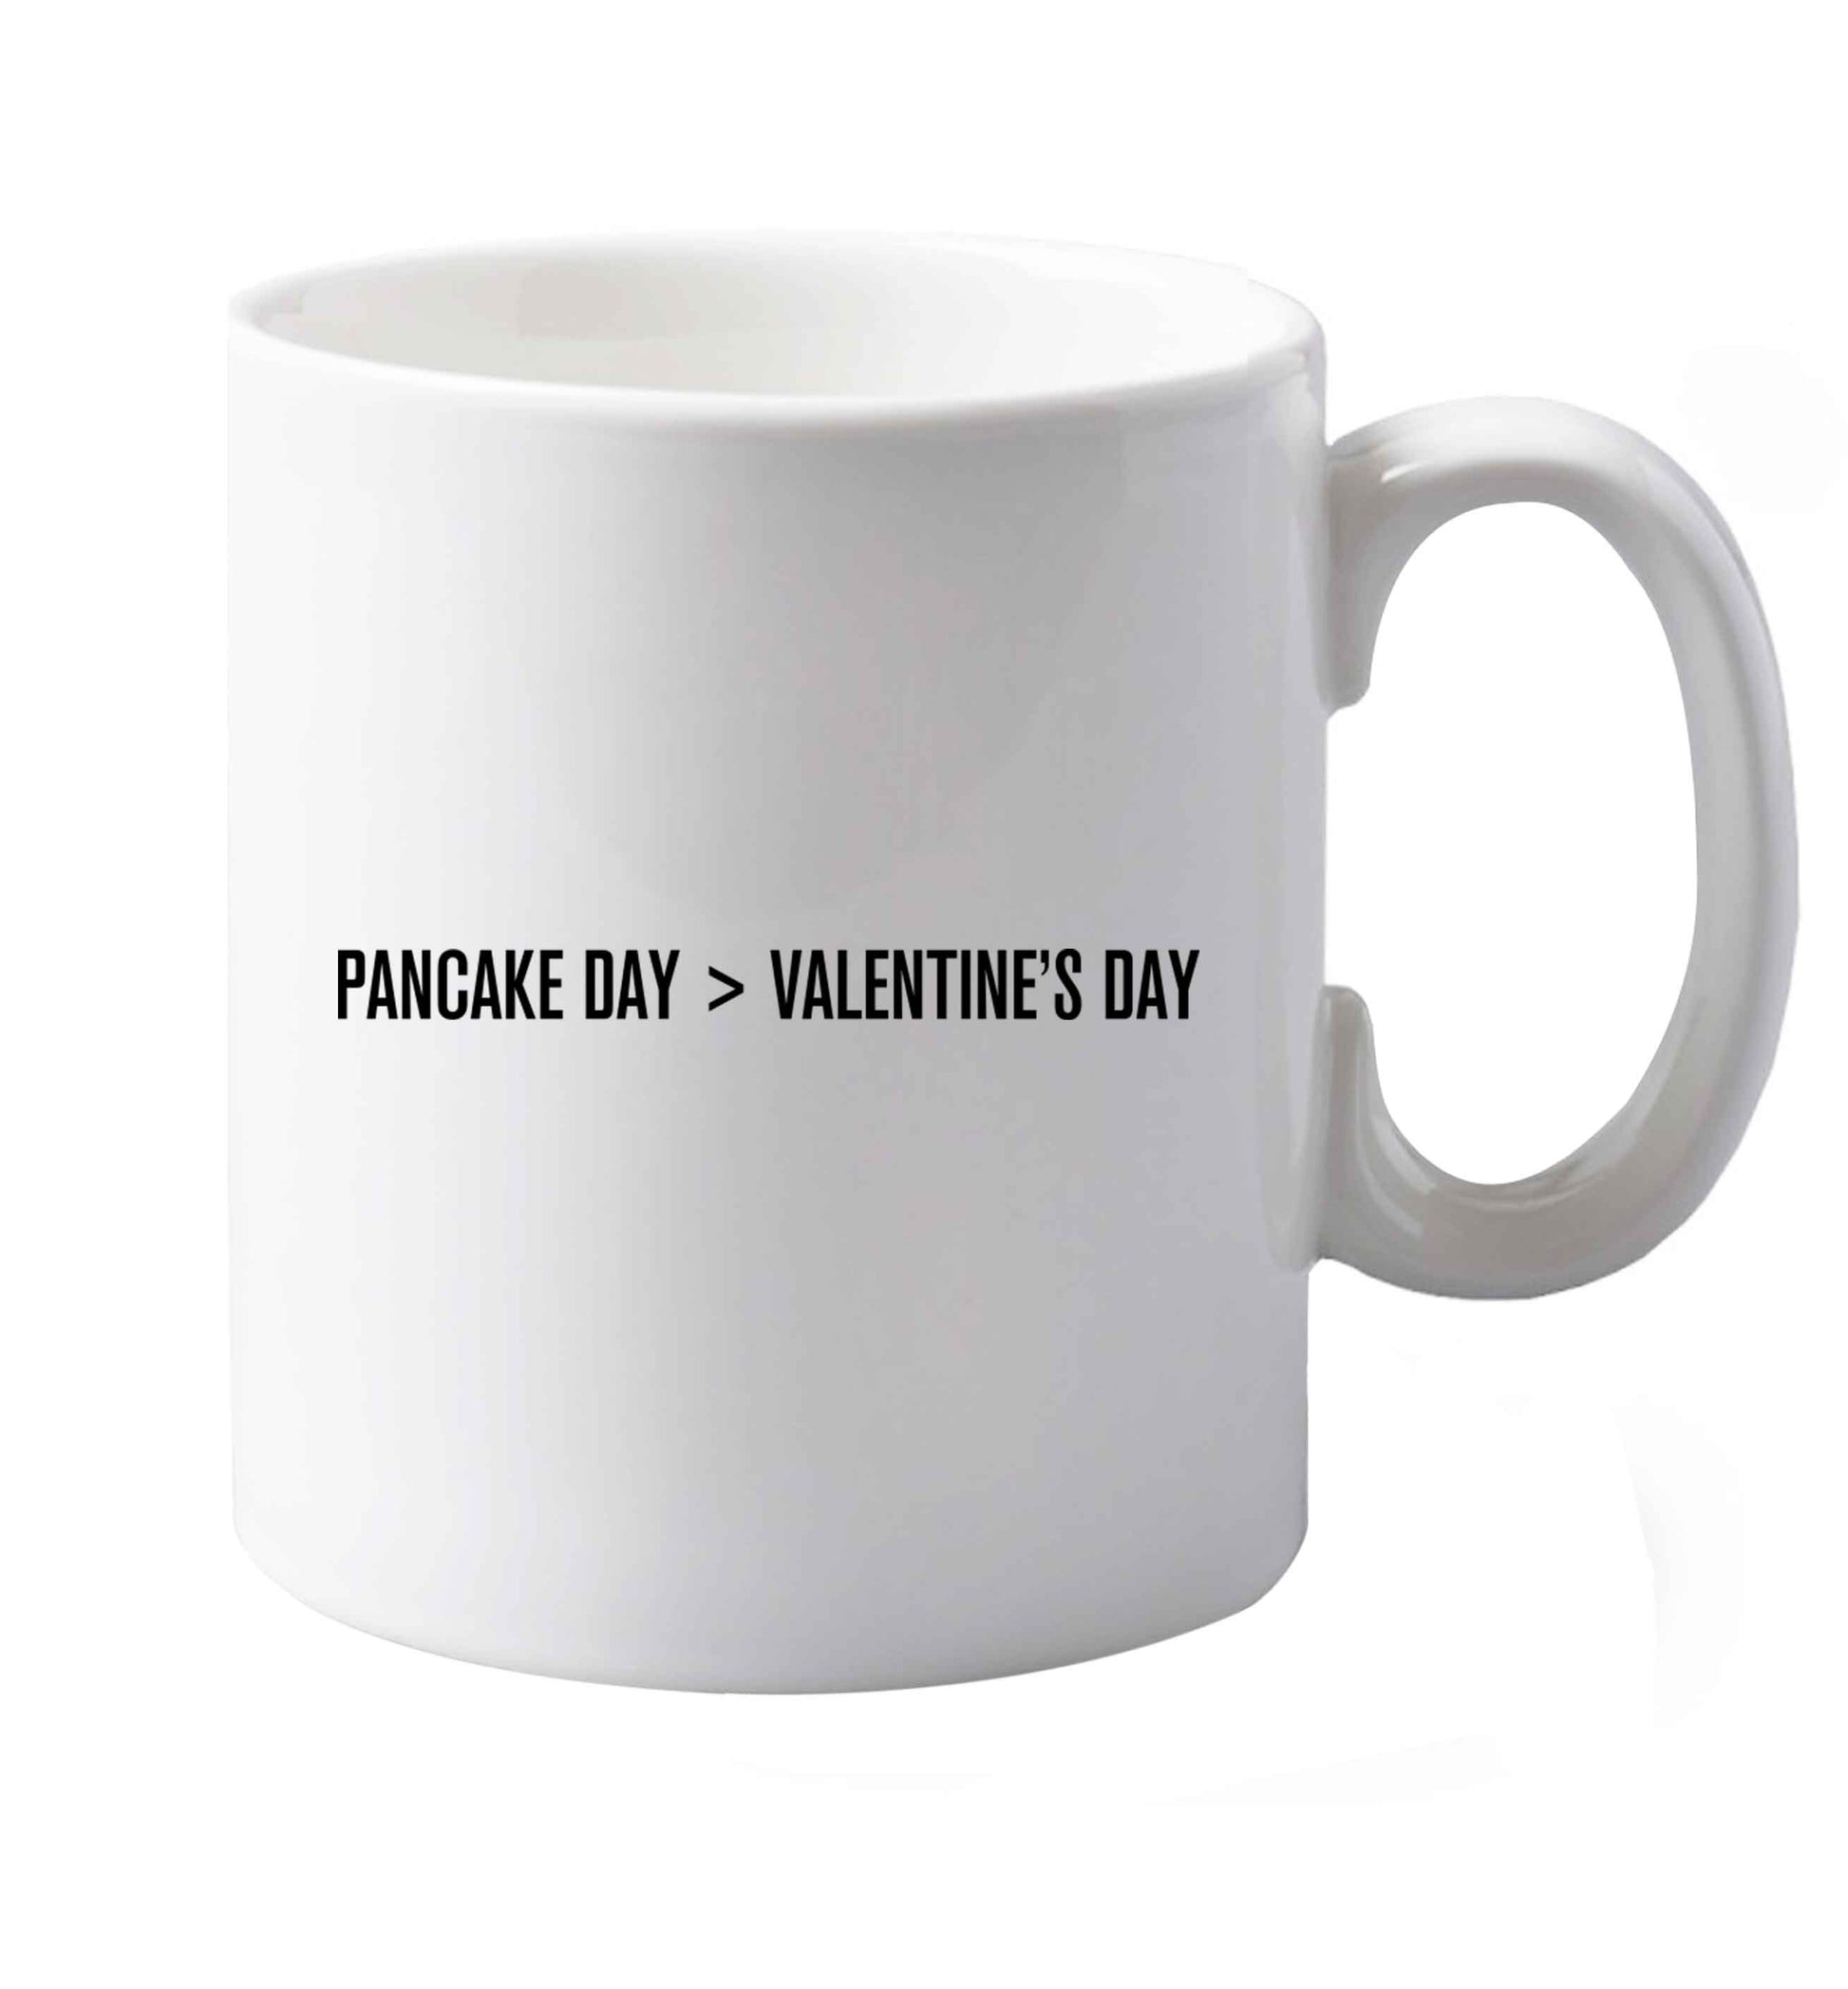 10 oz Pancake day > valentines day ceramic mug both sides